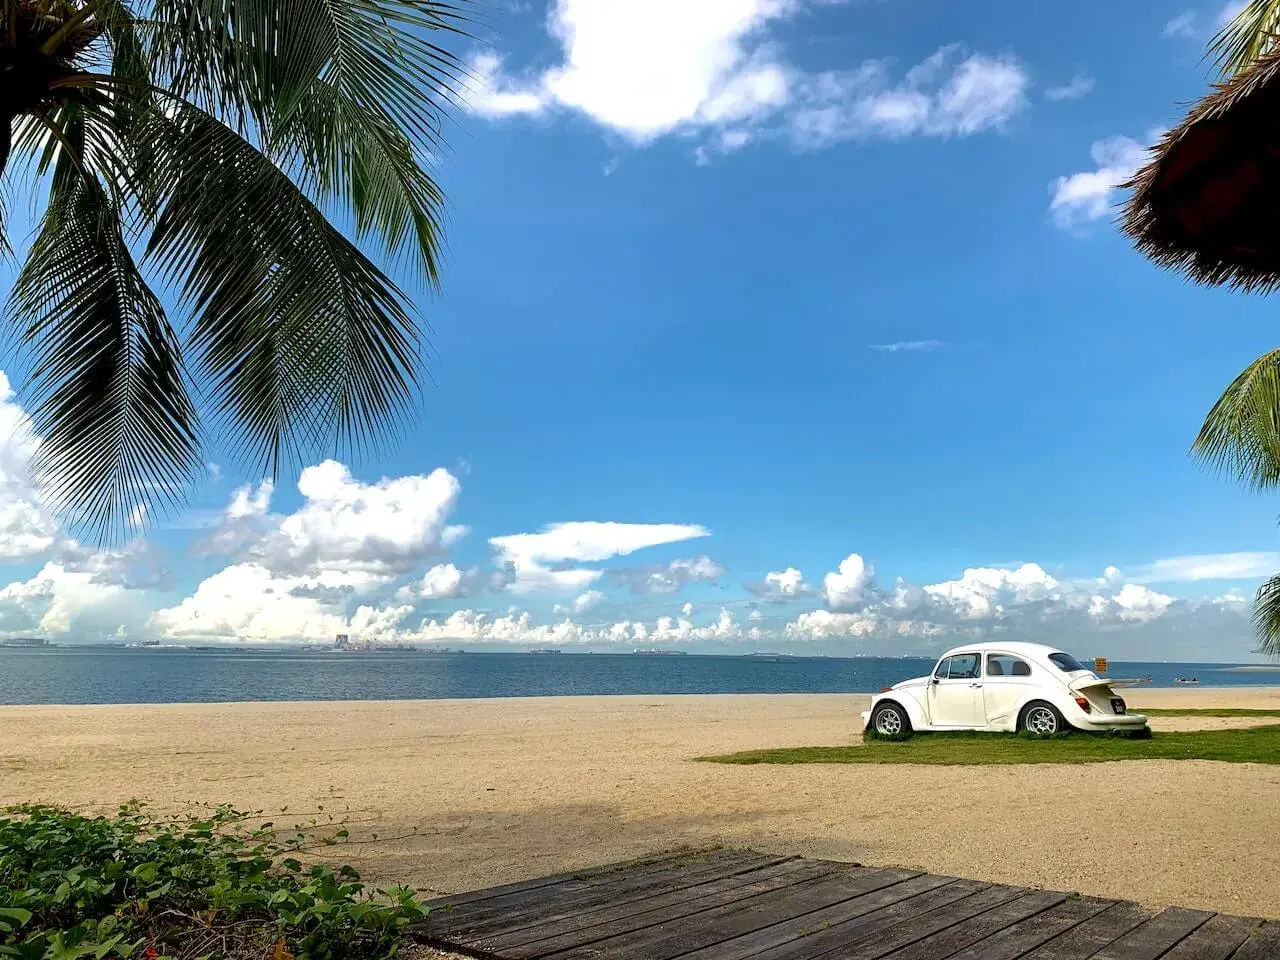 A White Beetle Car Parked on Seashore